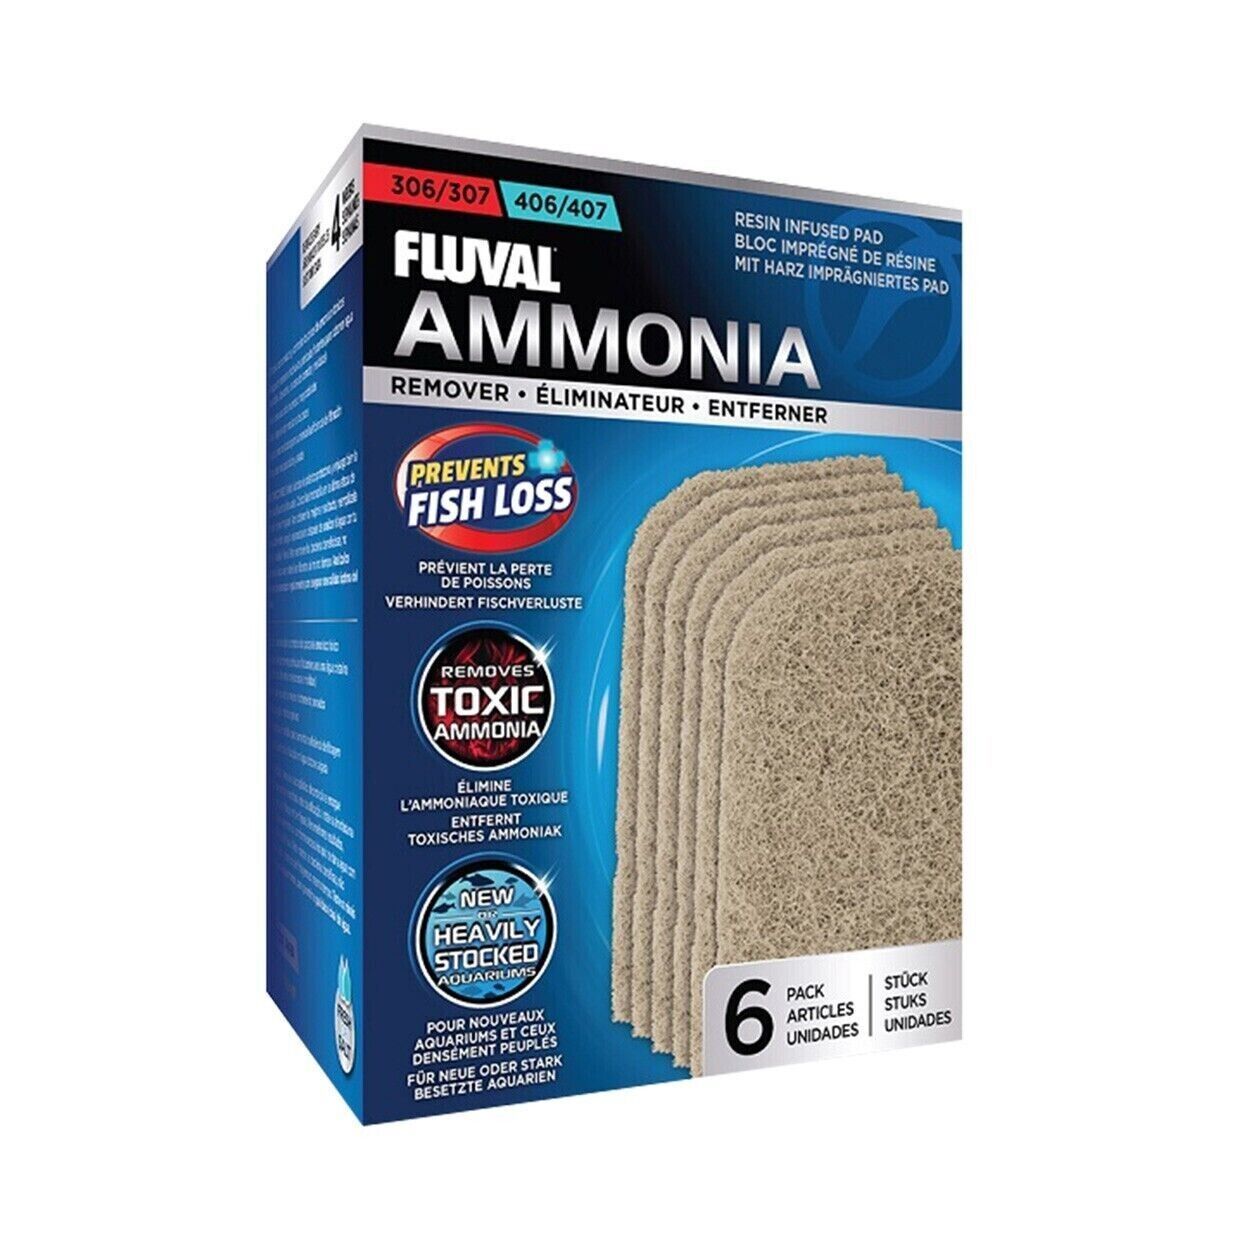 FLUVAL Ammonia Remover - 306/307 406/407 - 6 pk - $14.85